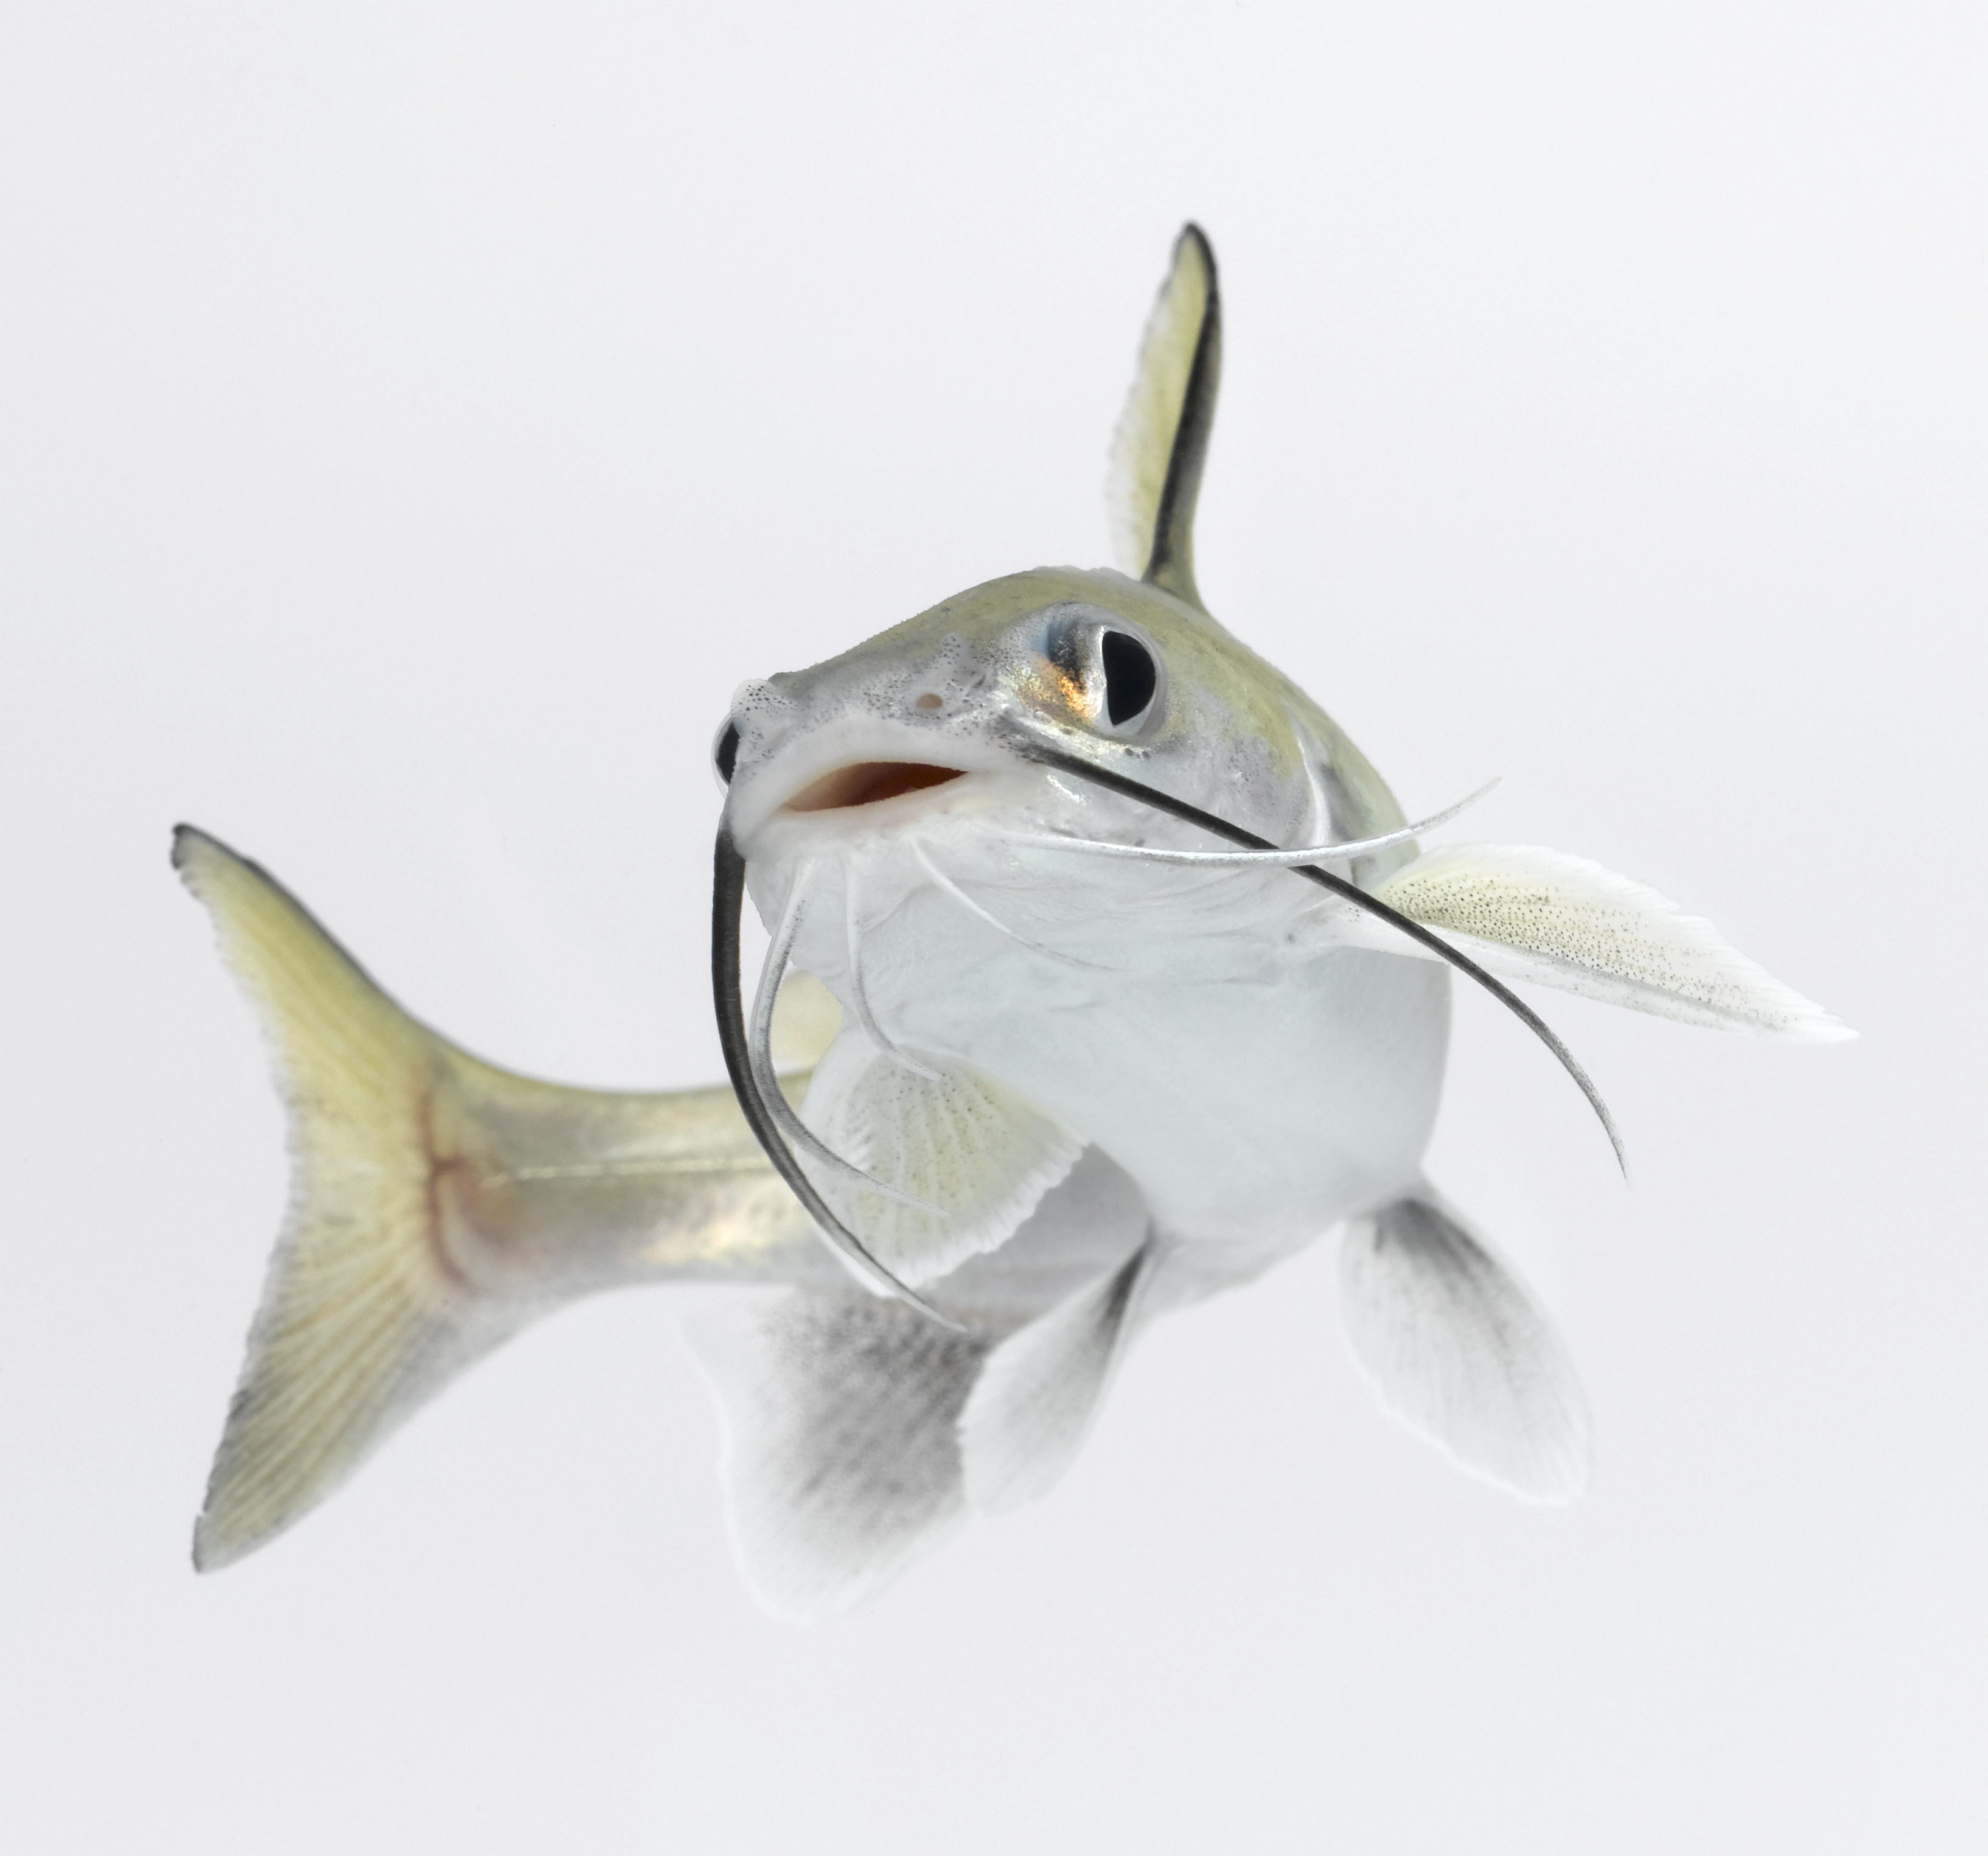 Tete sea catfish (Getty Images)